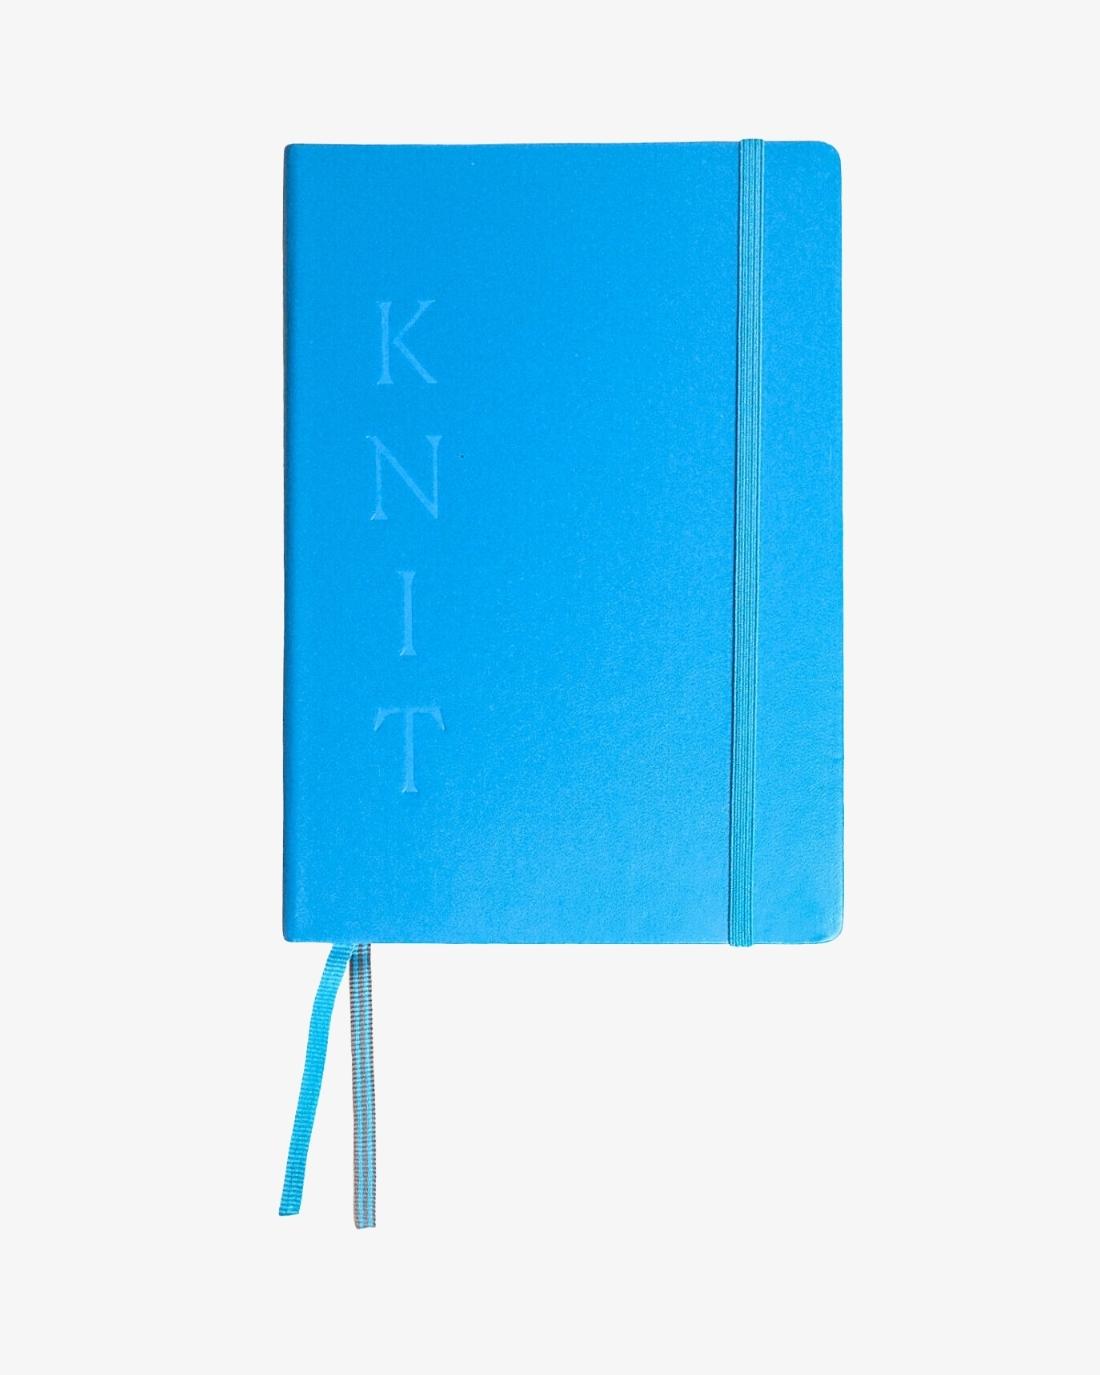 KNIT Notebook by Tatter